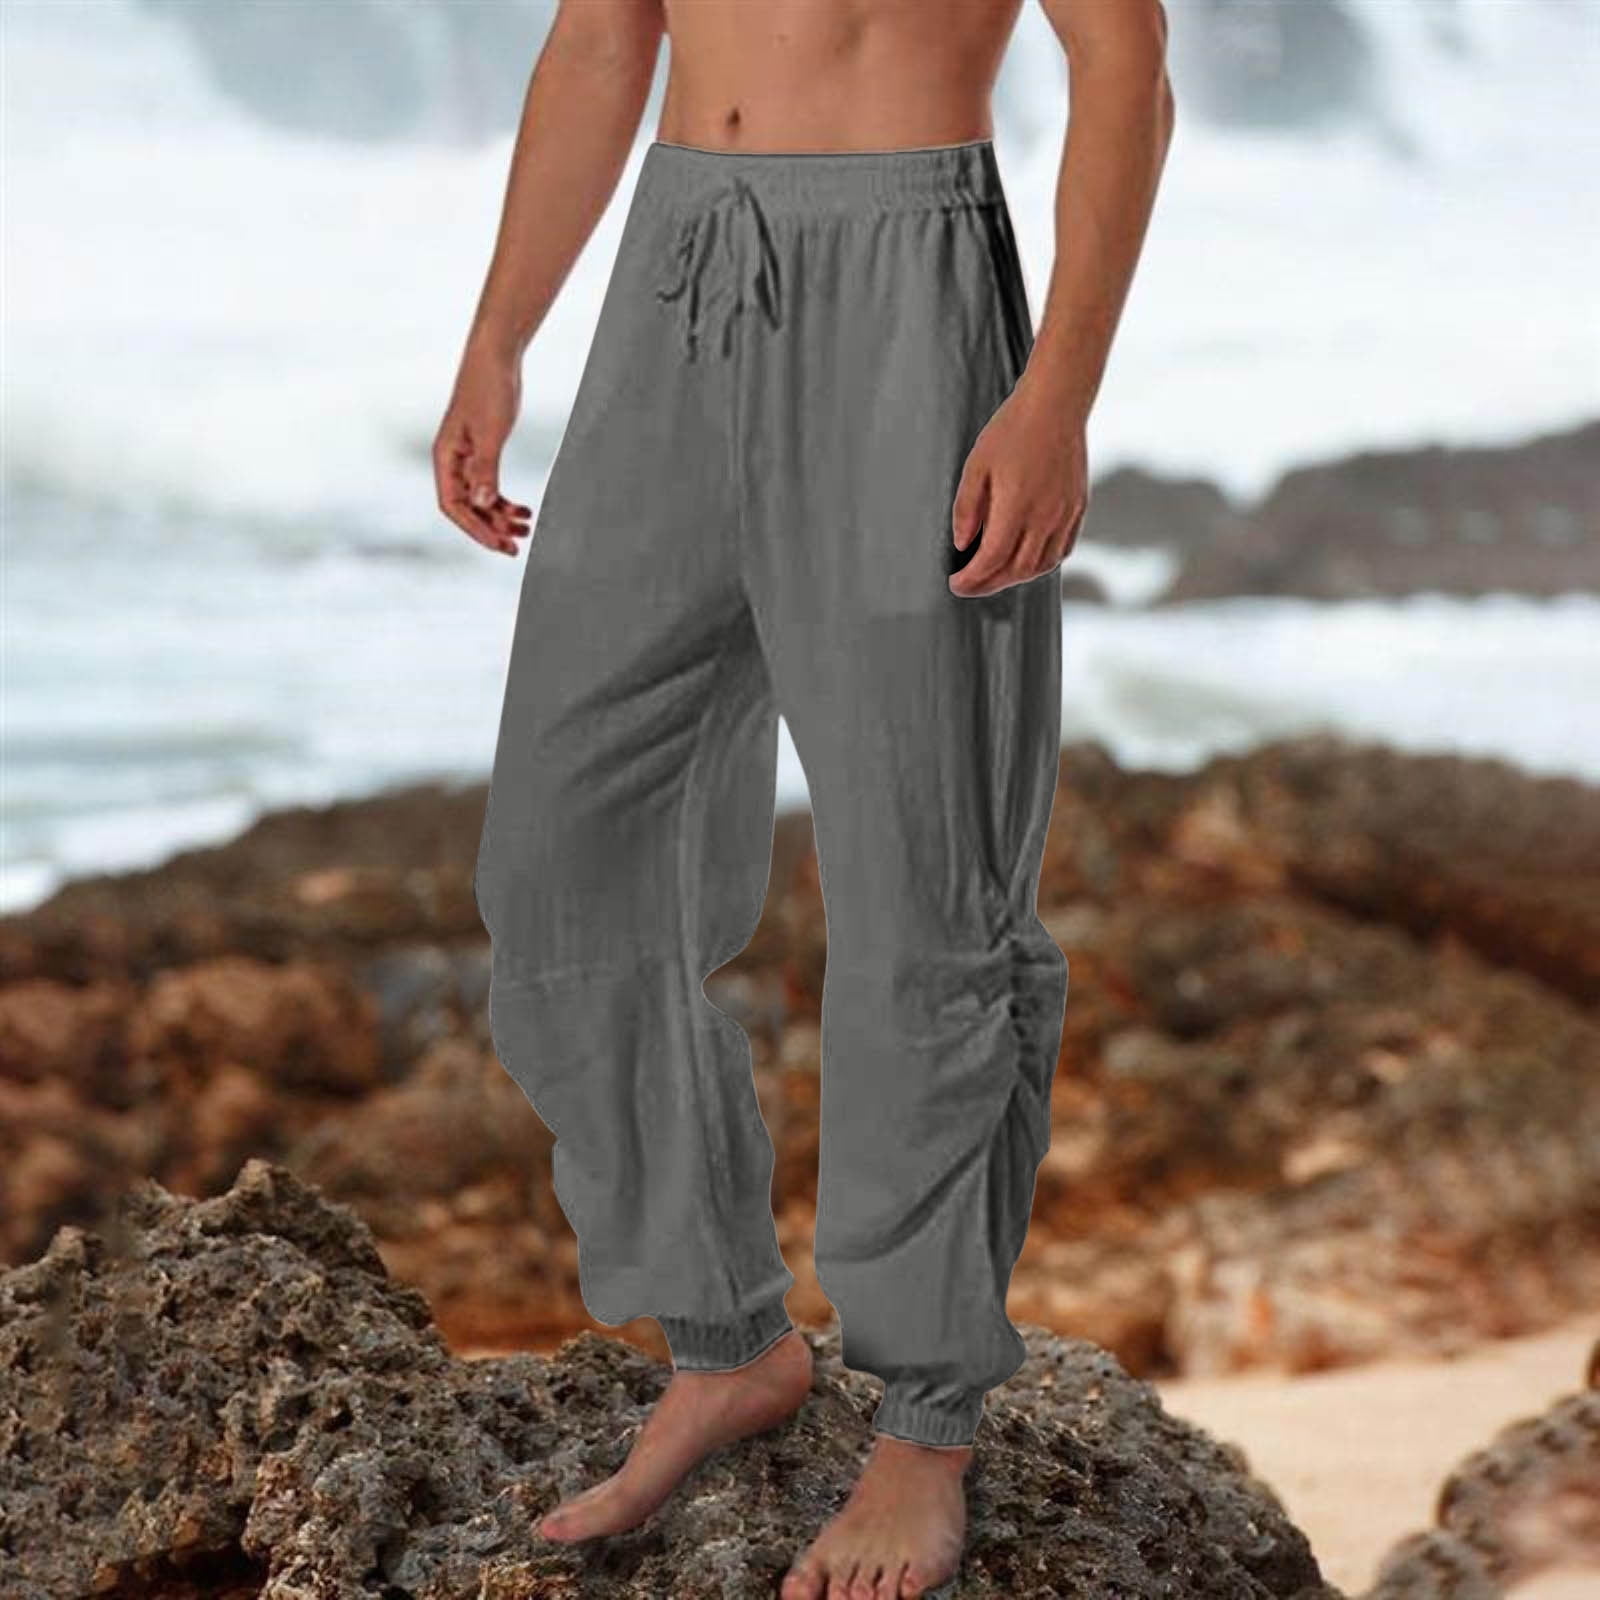 LEEy-World Men'S Pants Men's Workout Pants Elastic Waist Jogging Running  Pants for Men with Zipper Pockets Grey,M